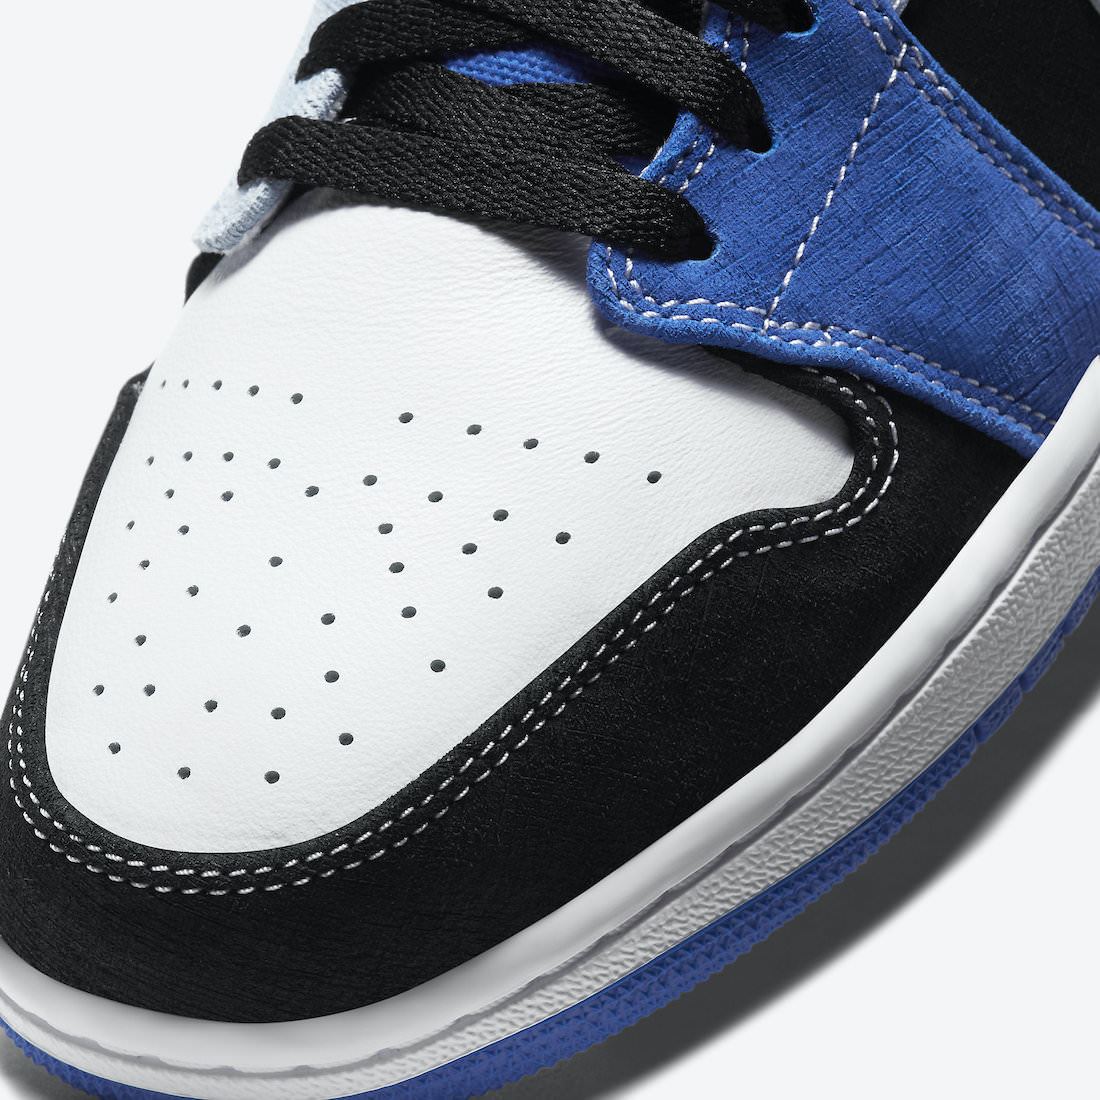 Air Jordan 1 Low Blue/Black/White 2021 Release Date | Nice Kicks